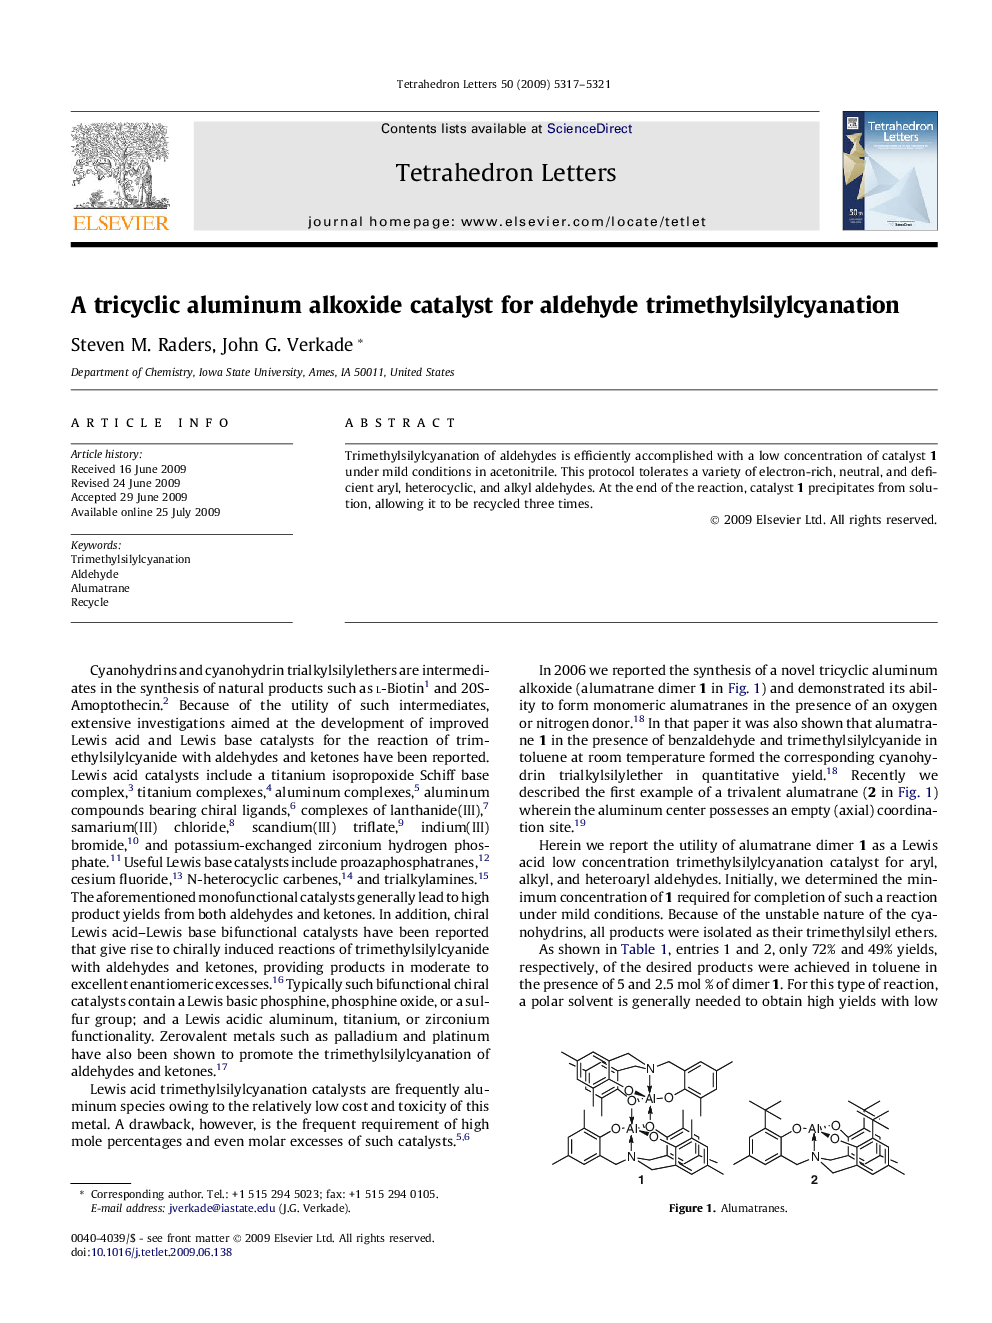 A tricyclic aluminum alkoxide catalyst for aldehyde trimethylsilylcyanation